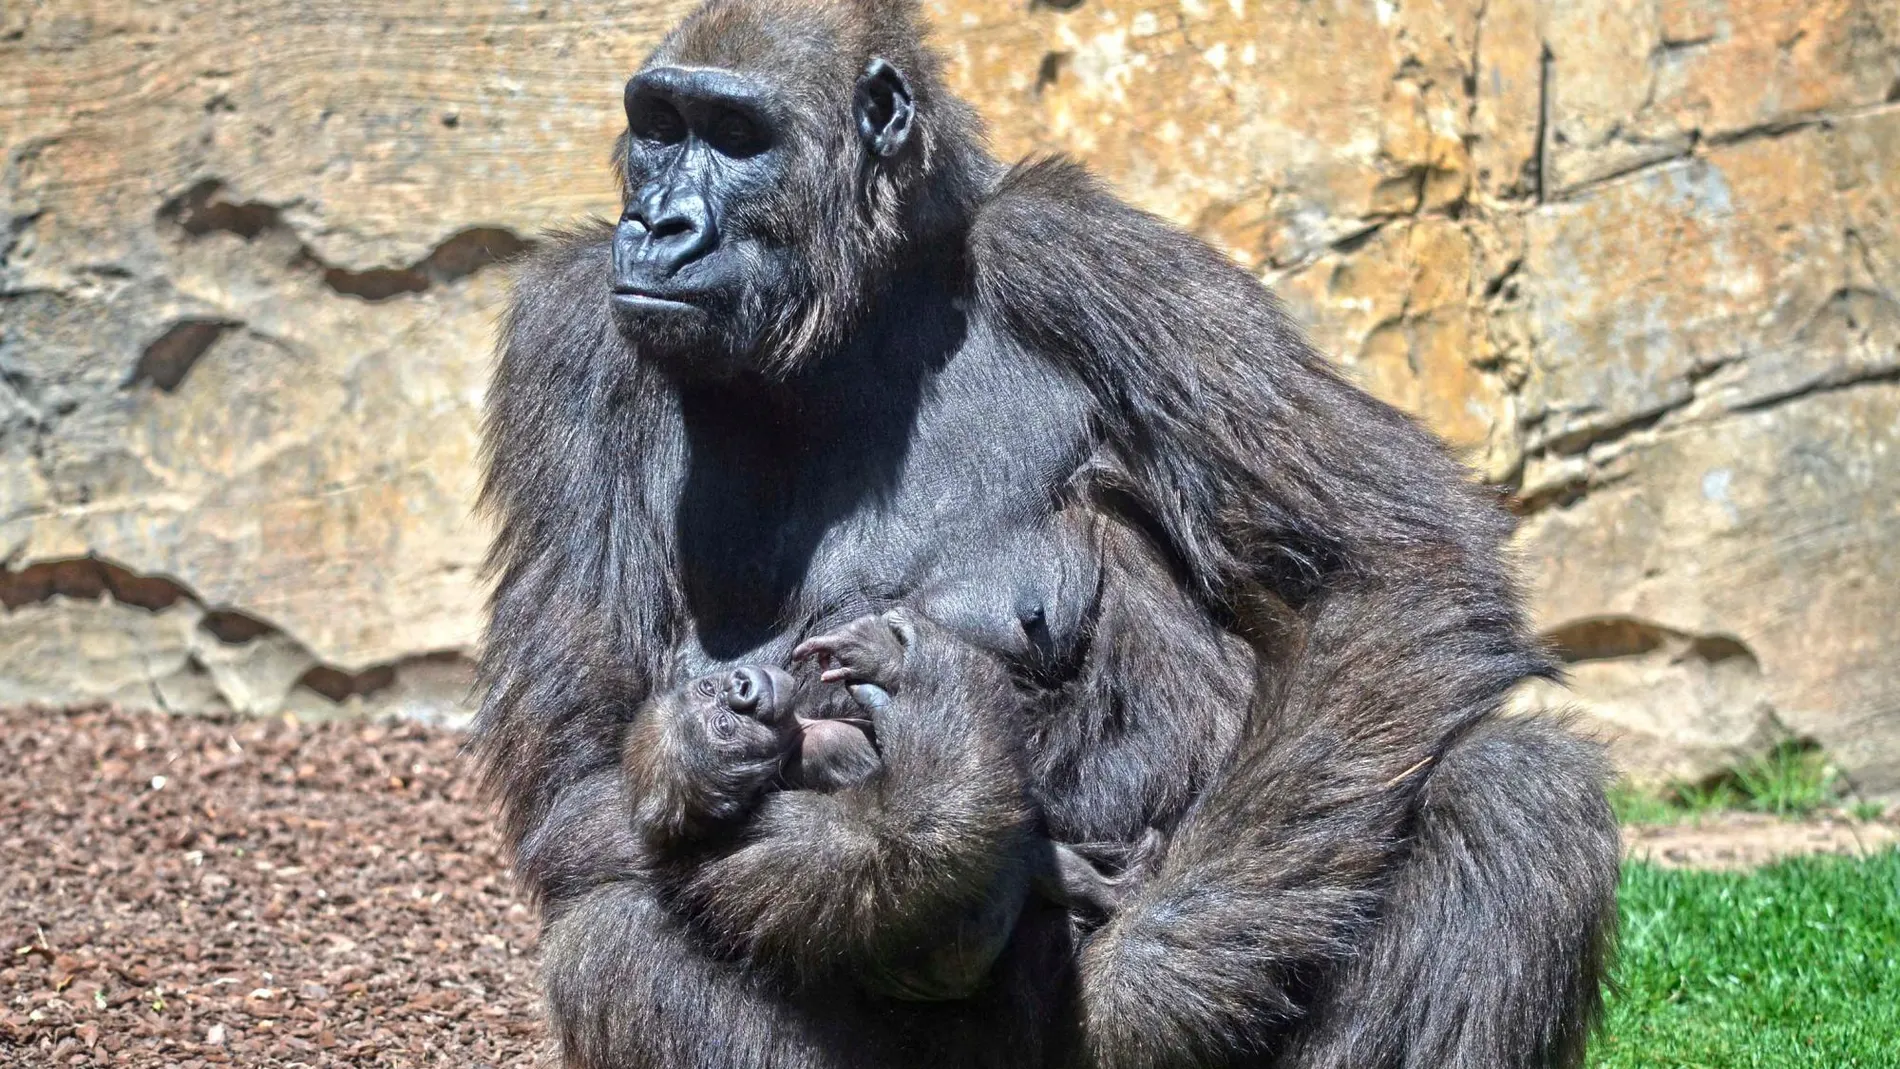 La mamá gorila con Félix en brazos